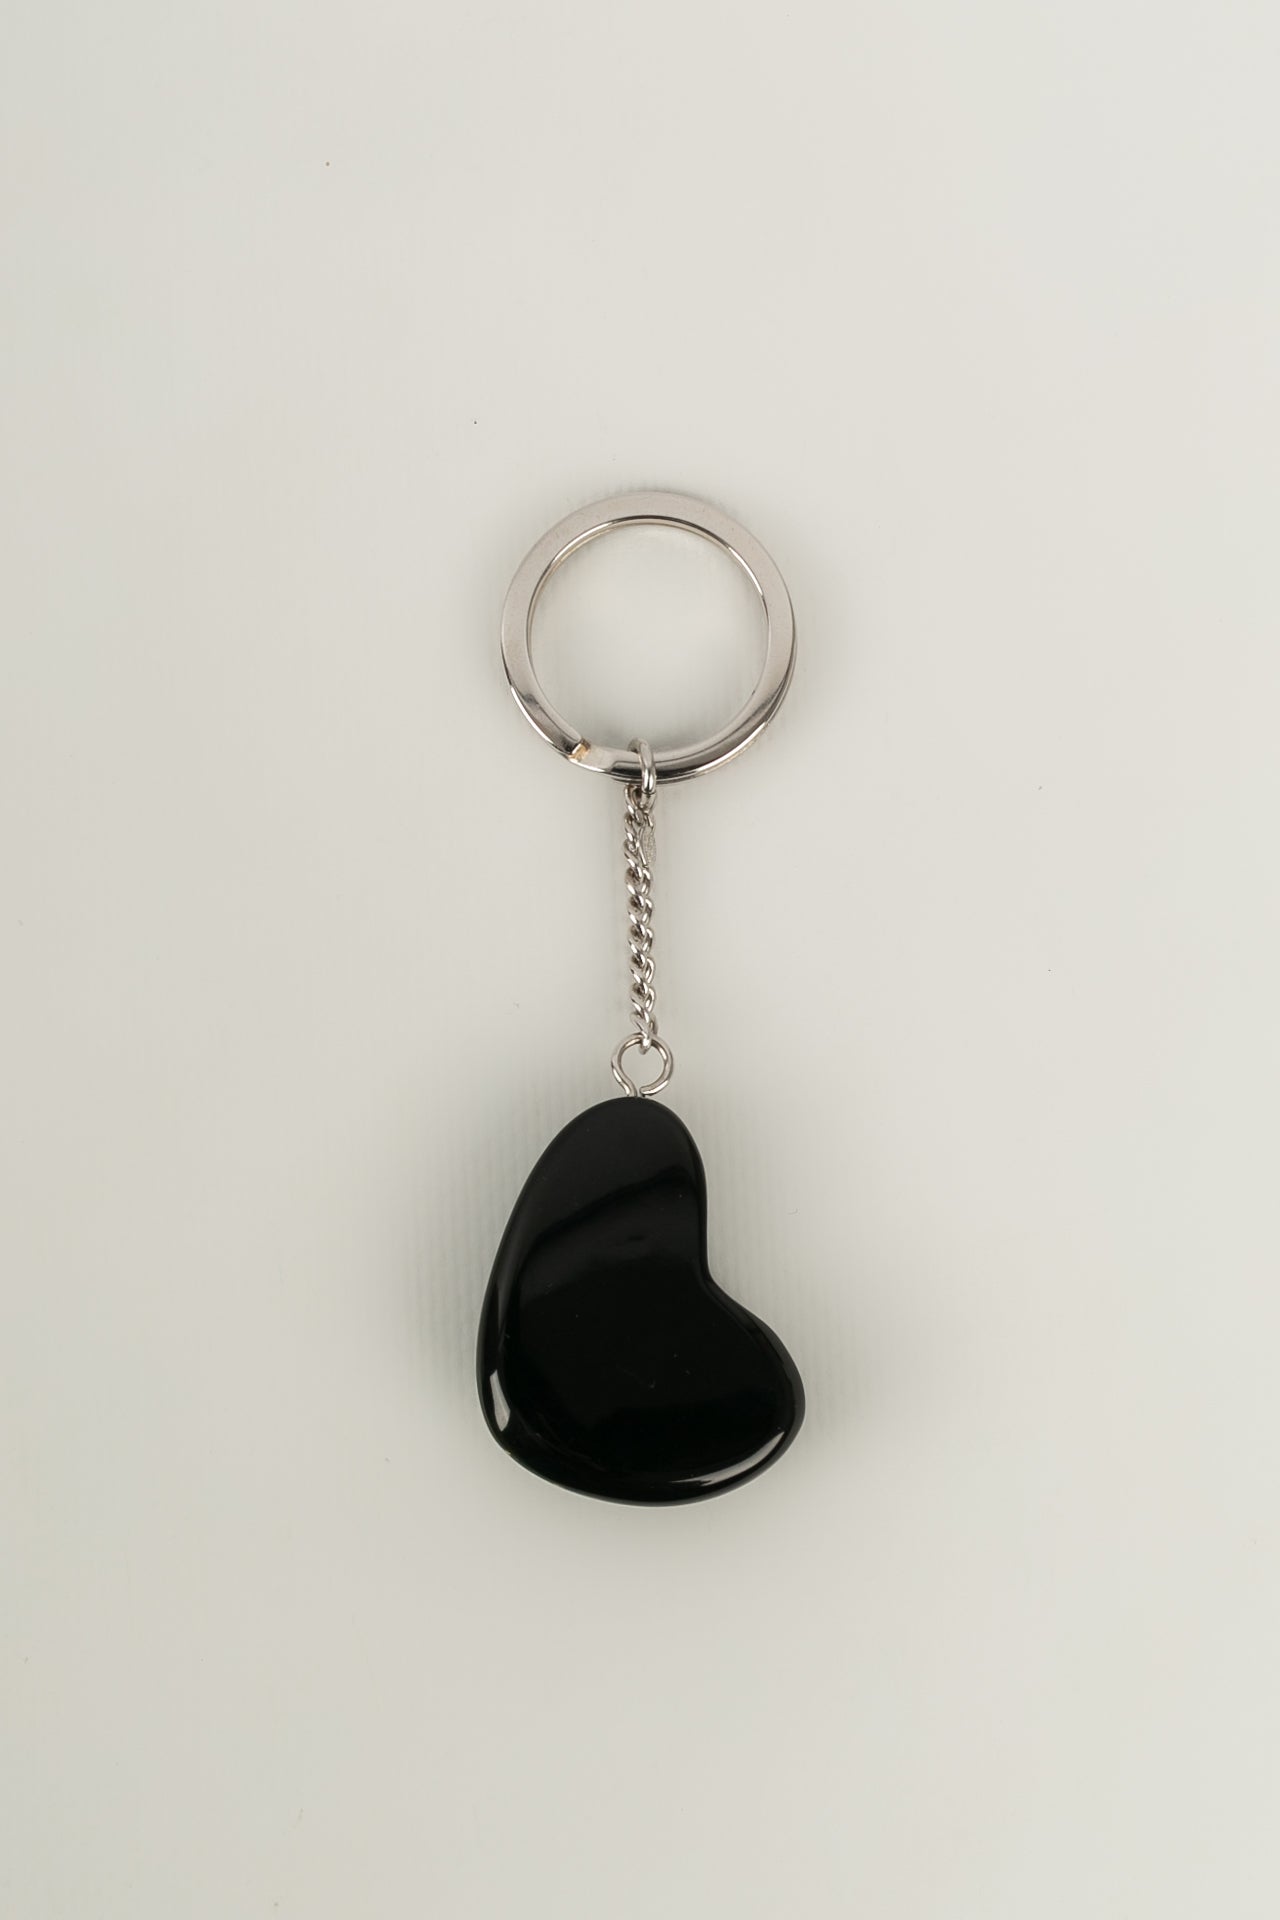 Chanel key ring